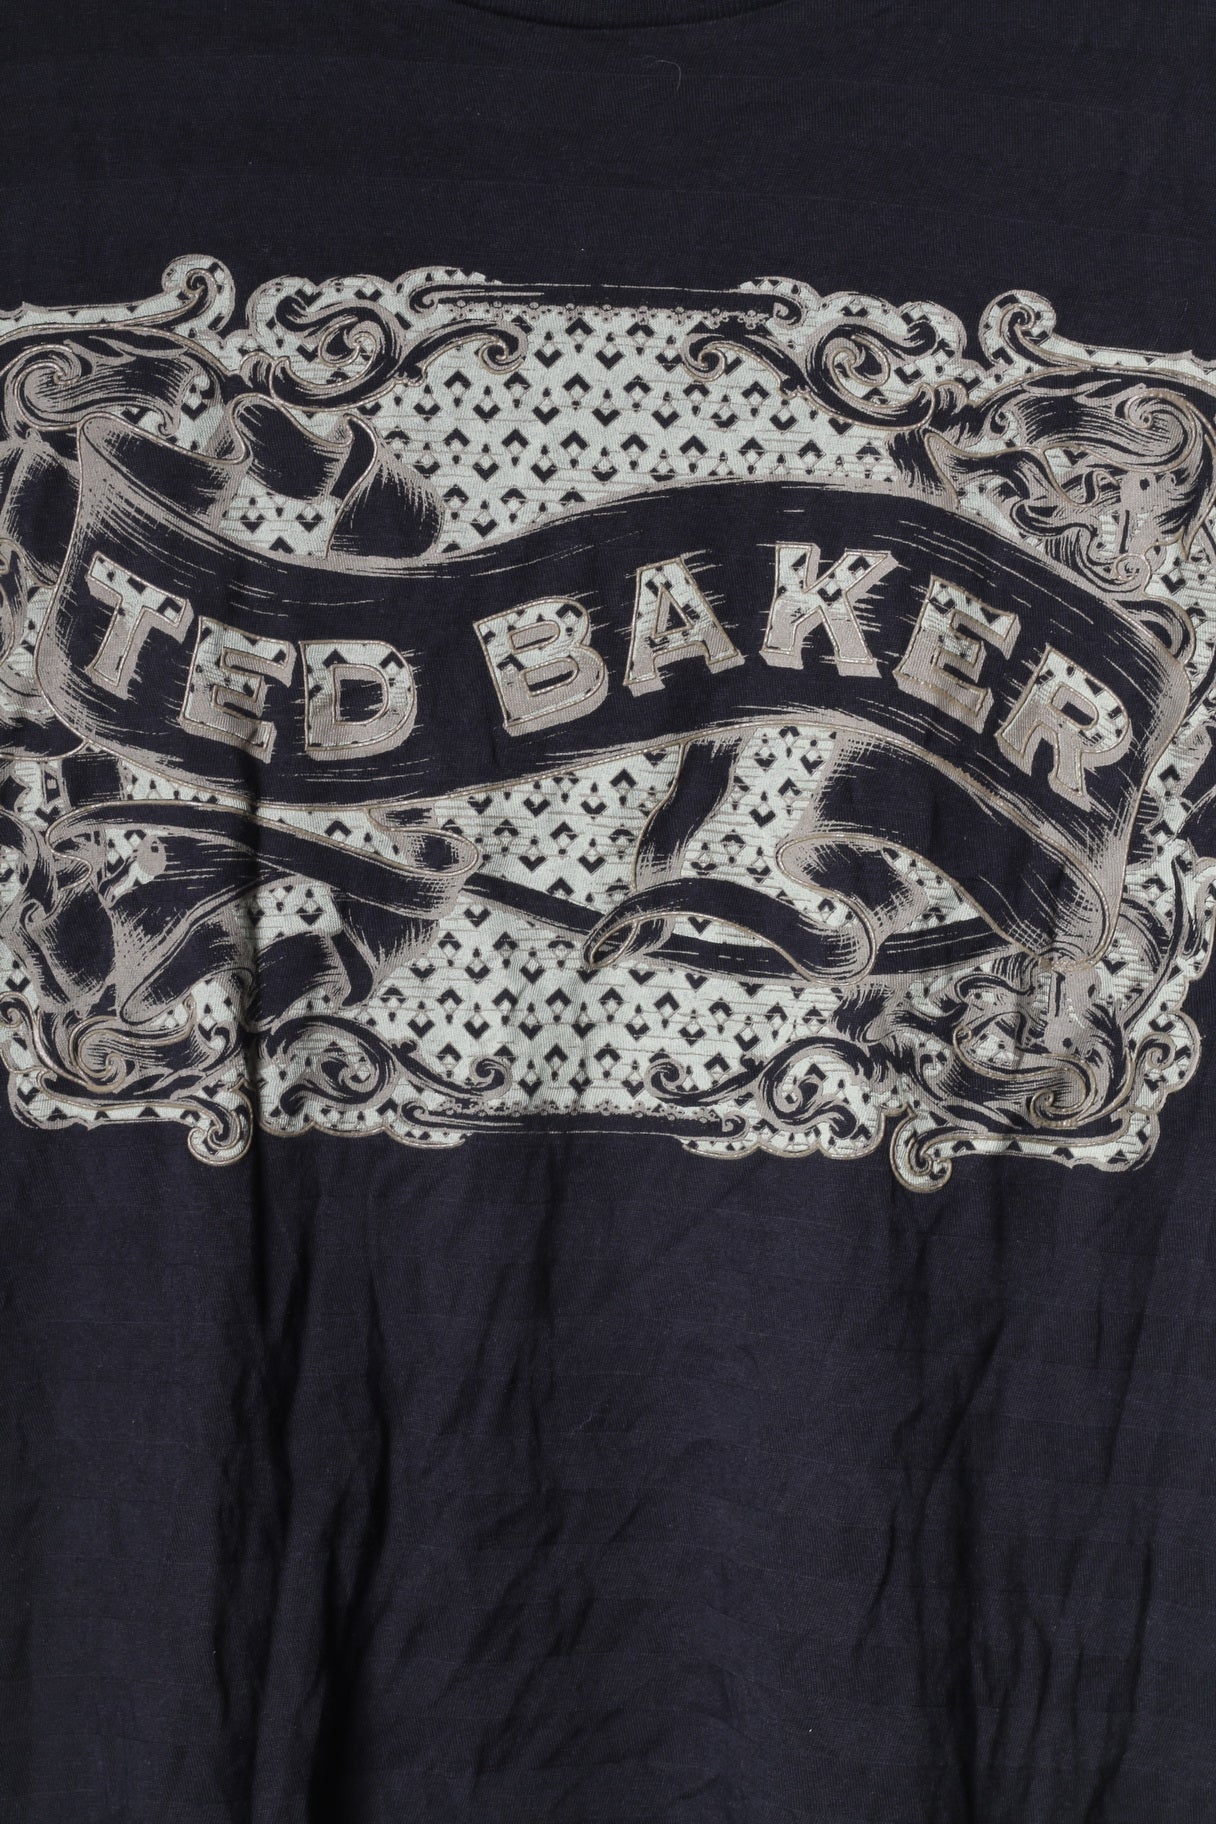 Ted Baker Men 5 M Shirt Black Graphic Cotton Crew Neck Classic Top